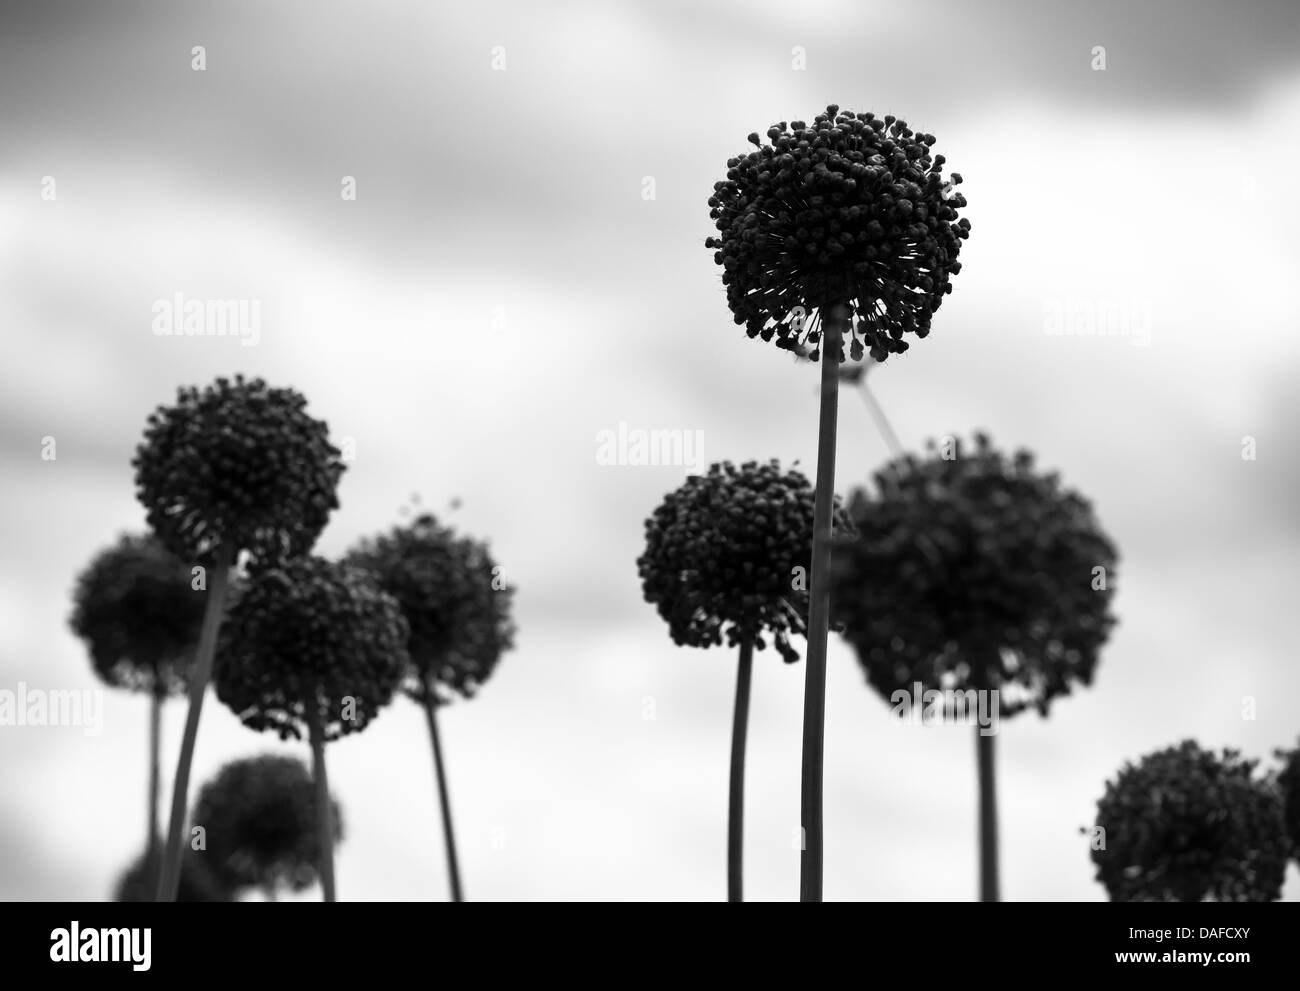 Allium flower heads Black and White Stock Photos & Images - Alamy